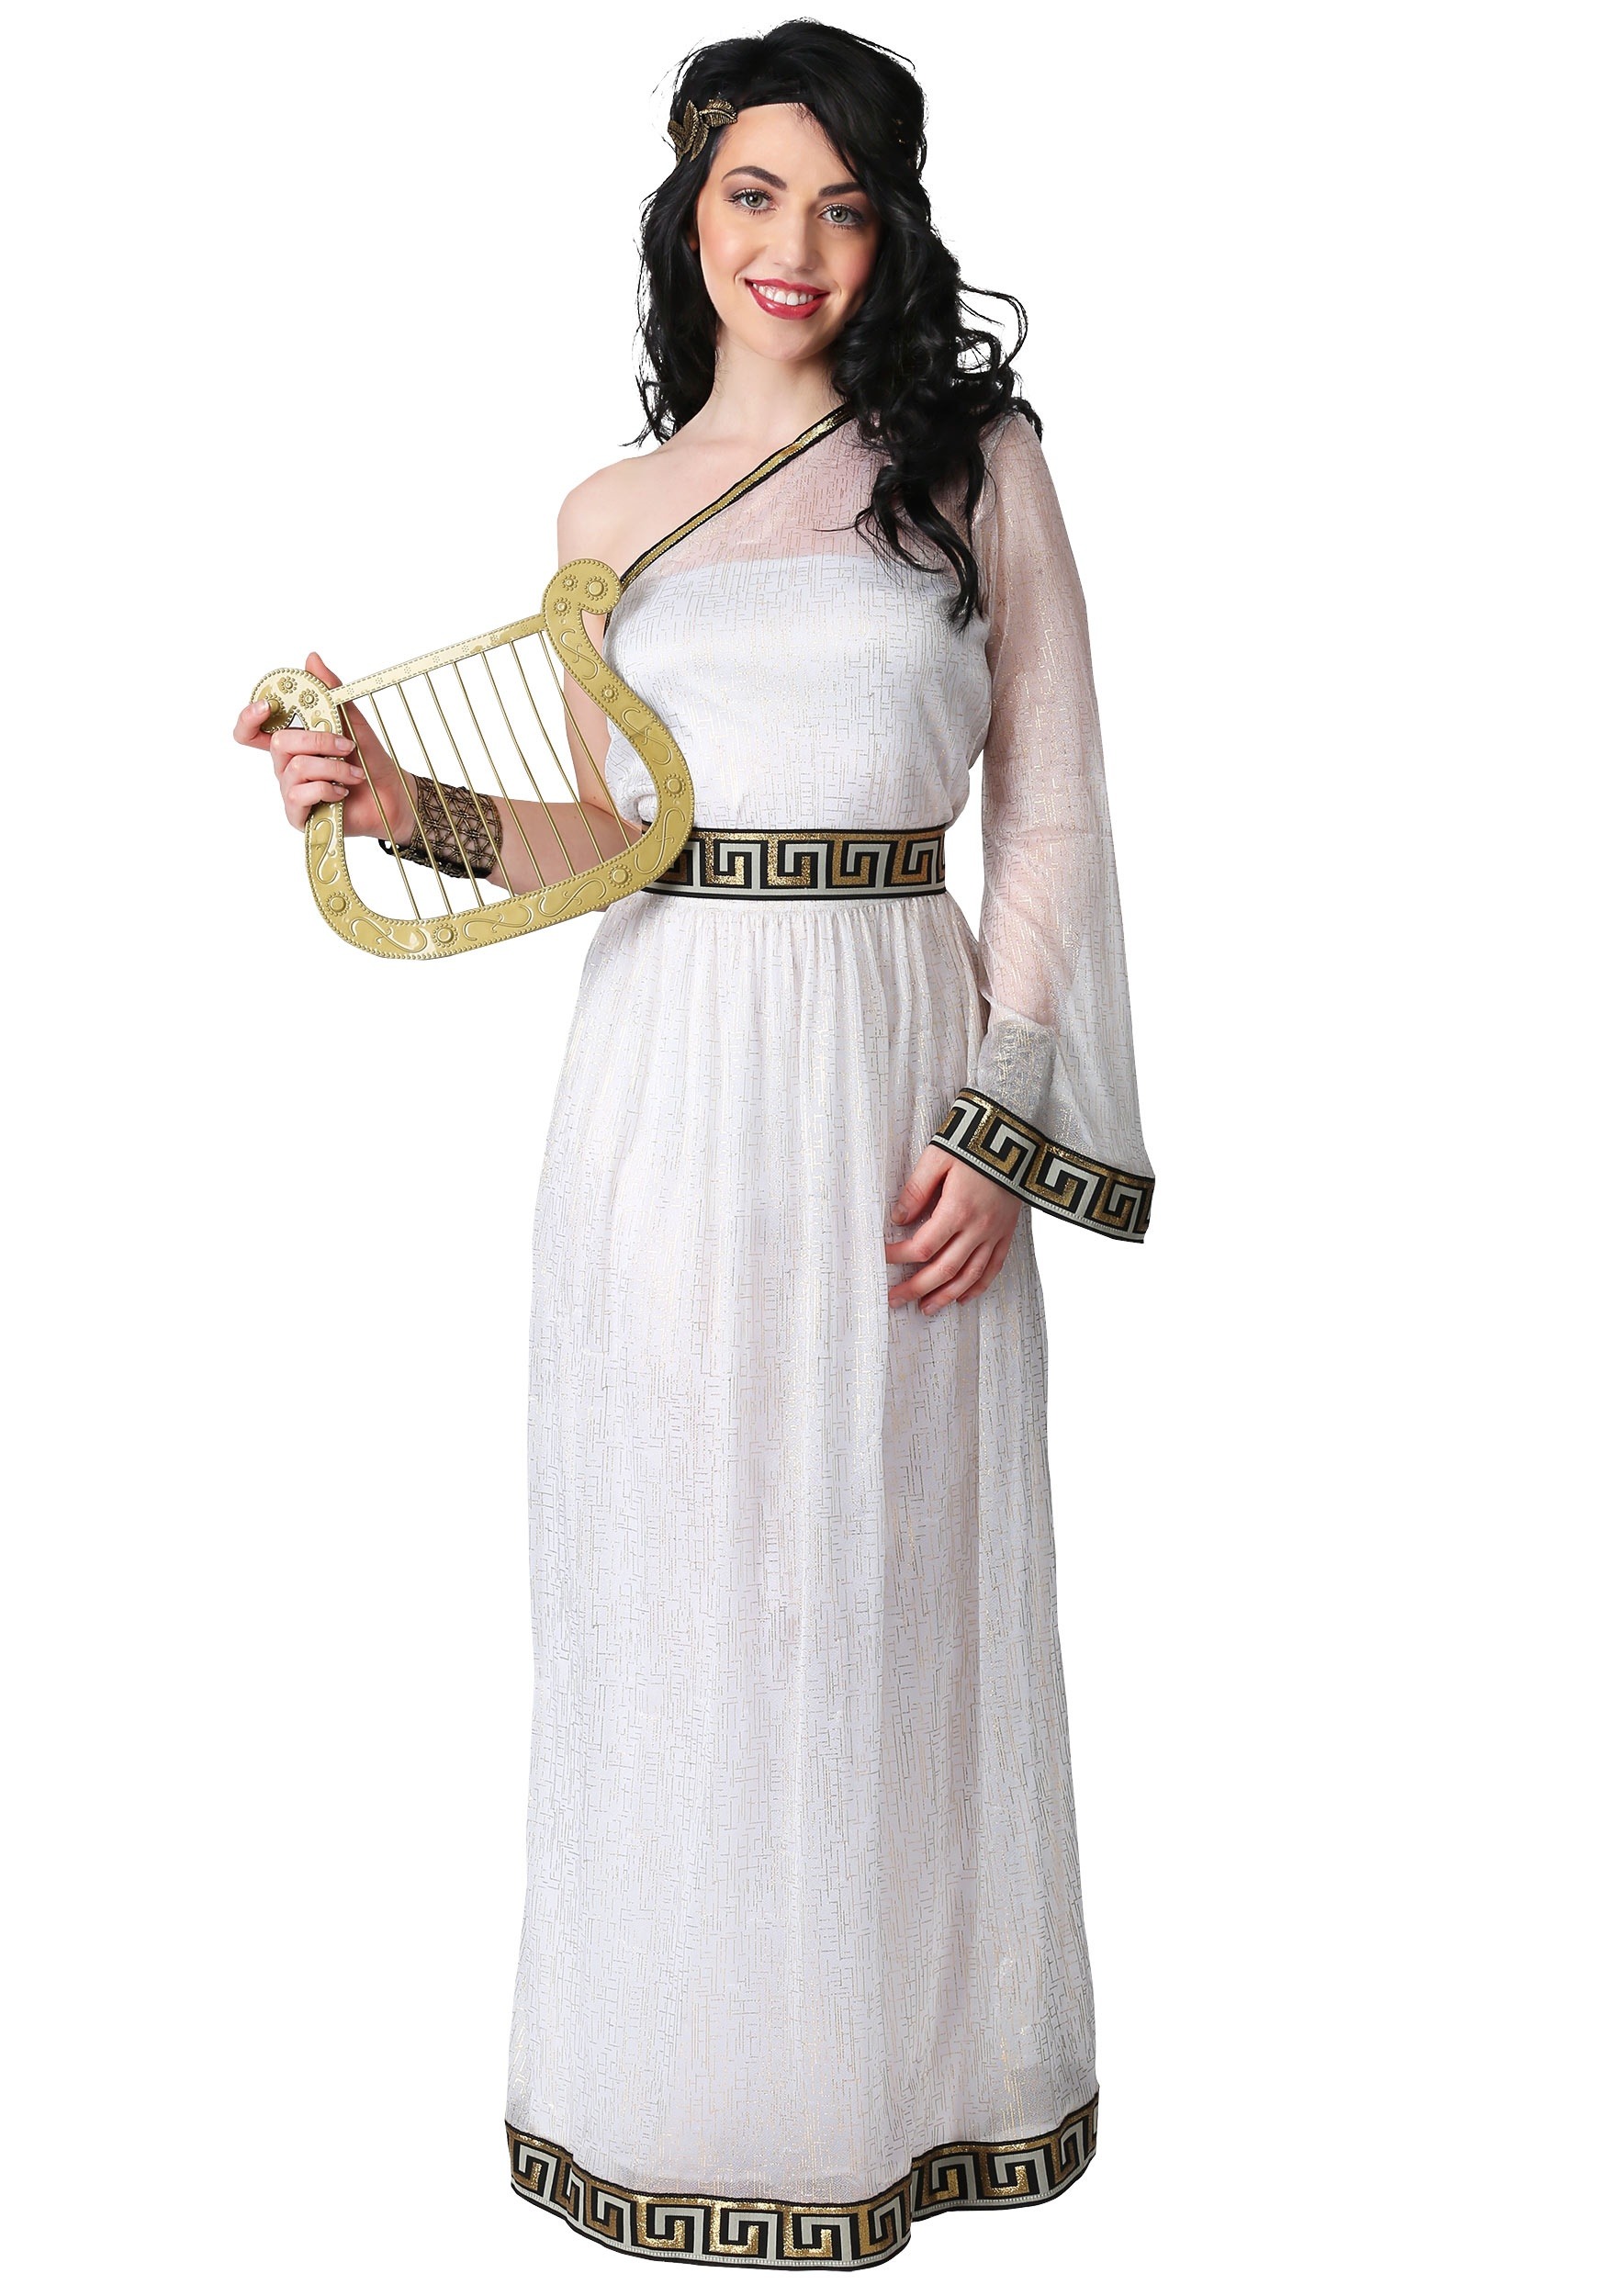 Womens Grecian Goddess Costume